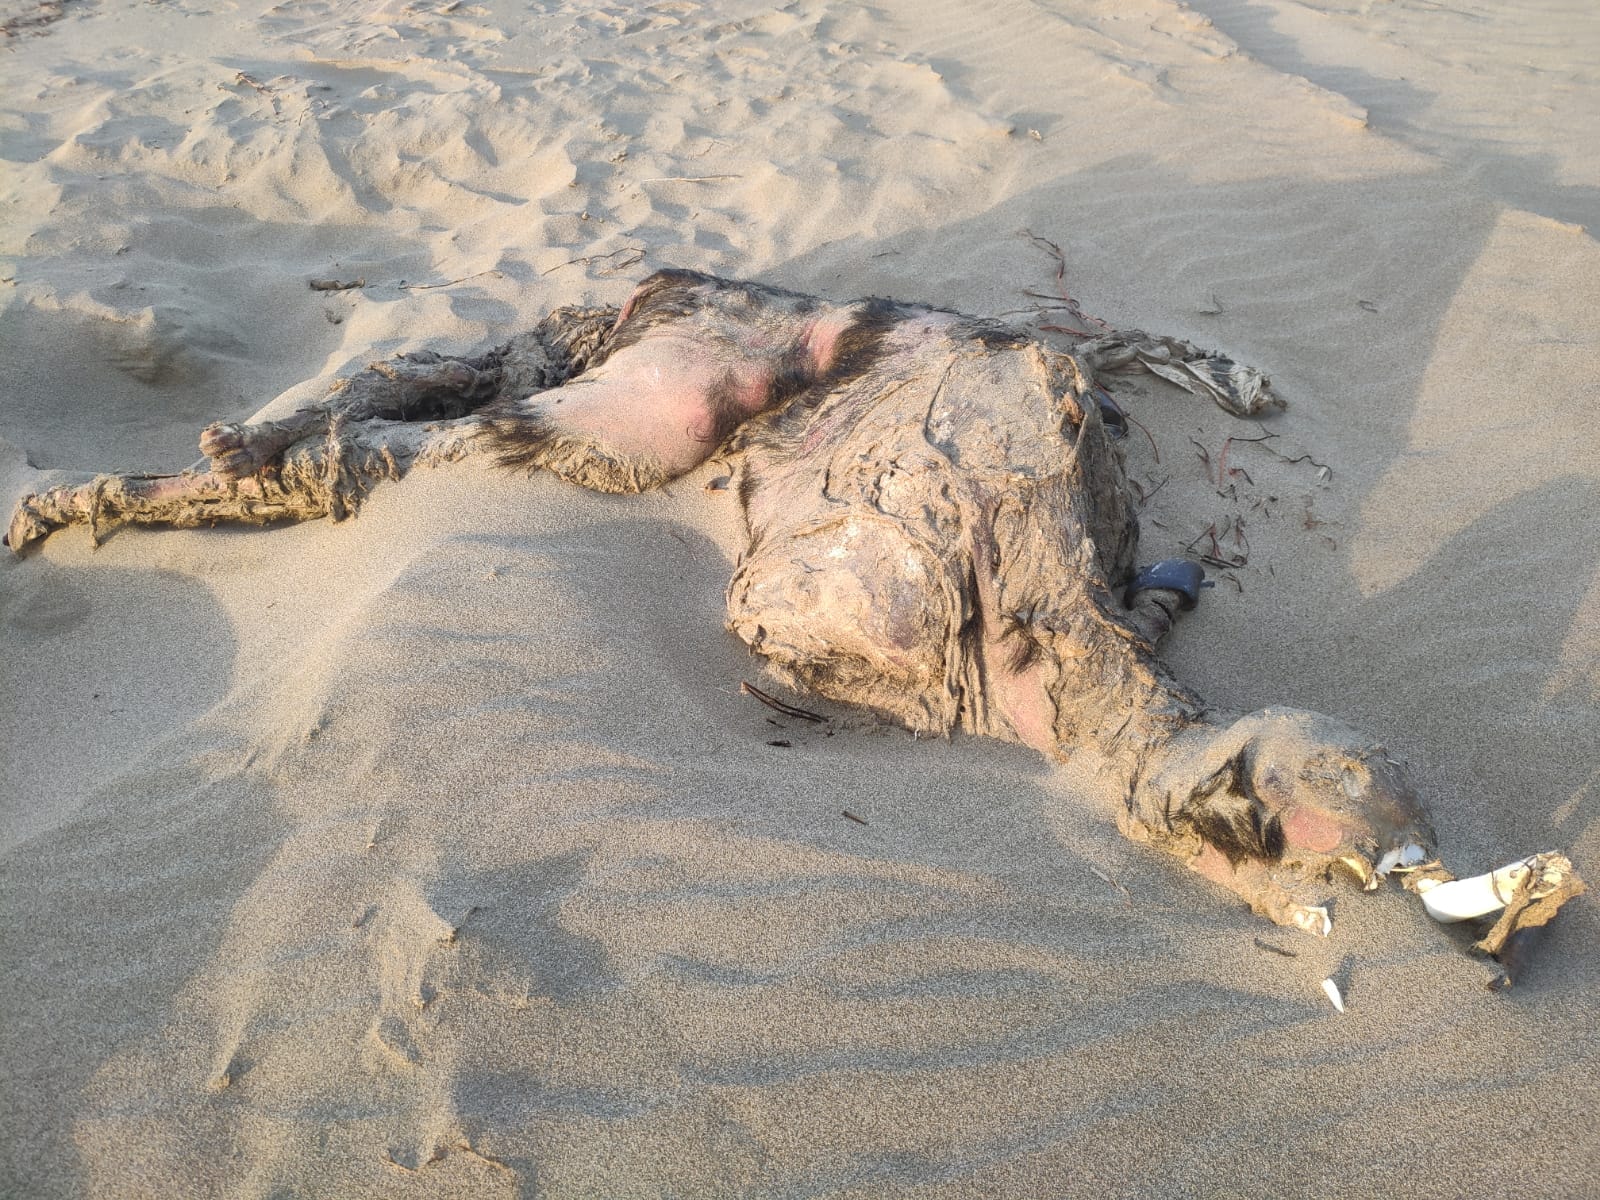 bufale-morte-capaccio-paestum-spiaggia-6-febbraio